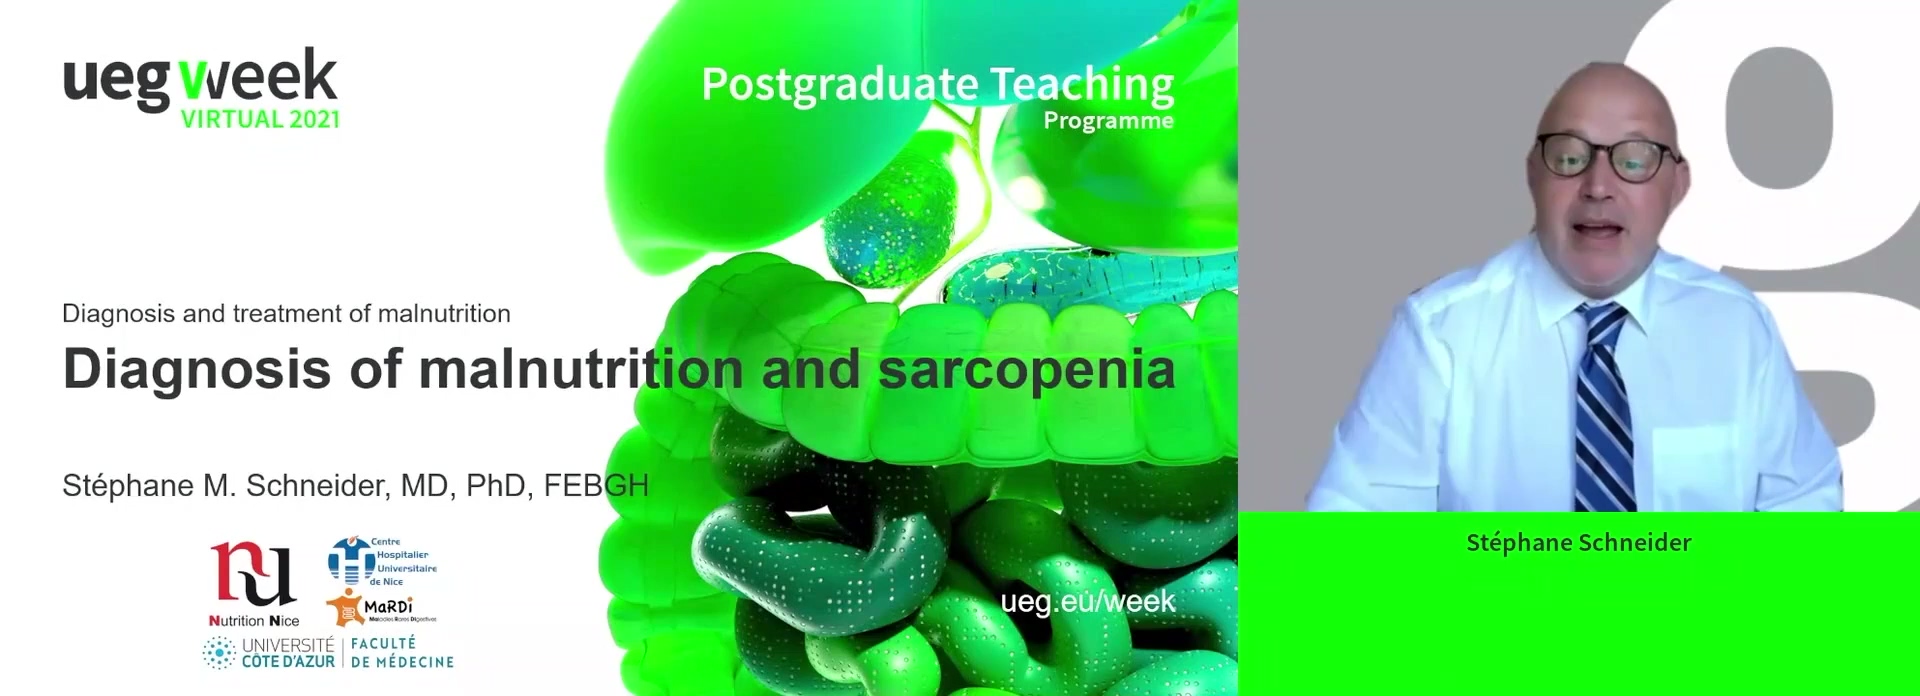 Diagnosis of malnutrition and sarcopenia